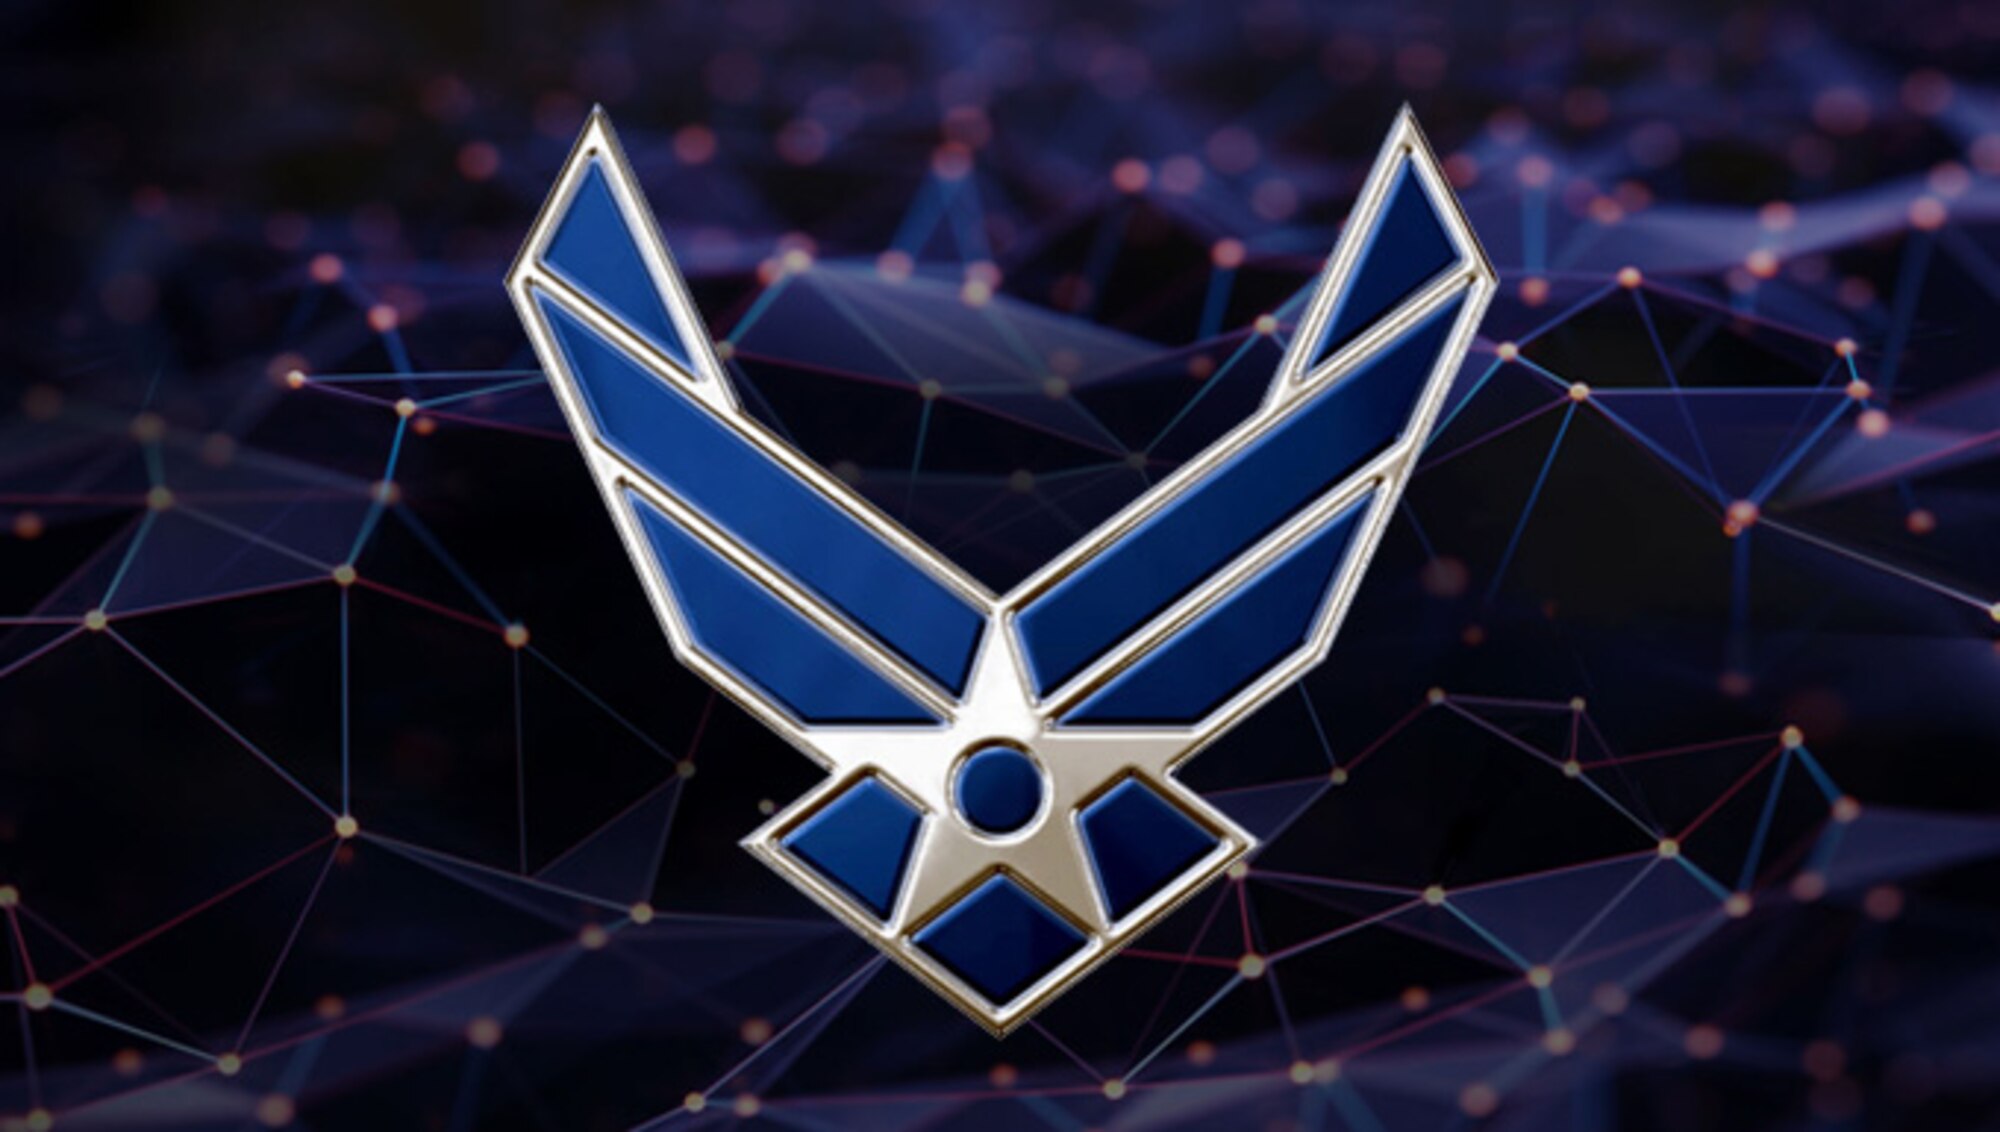 Solved: Battlefield 4 emblem not showing - Answer HQ